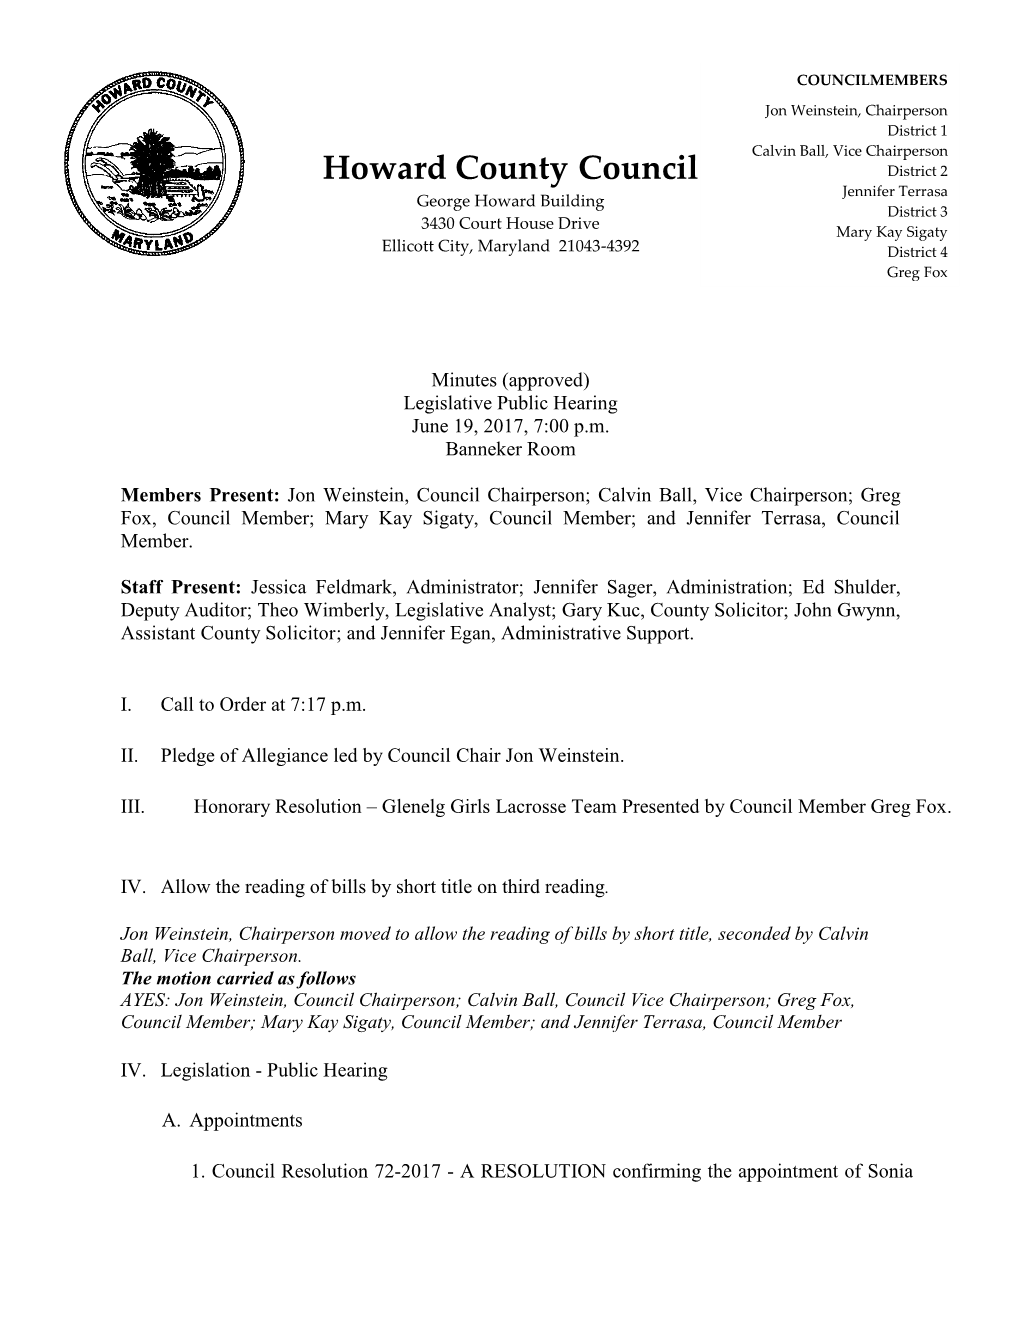 Howard County Council